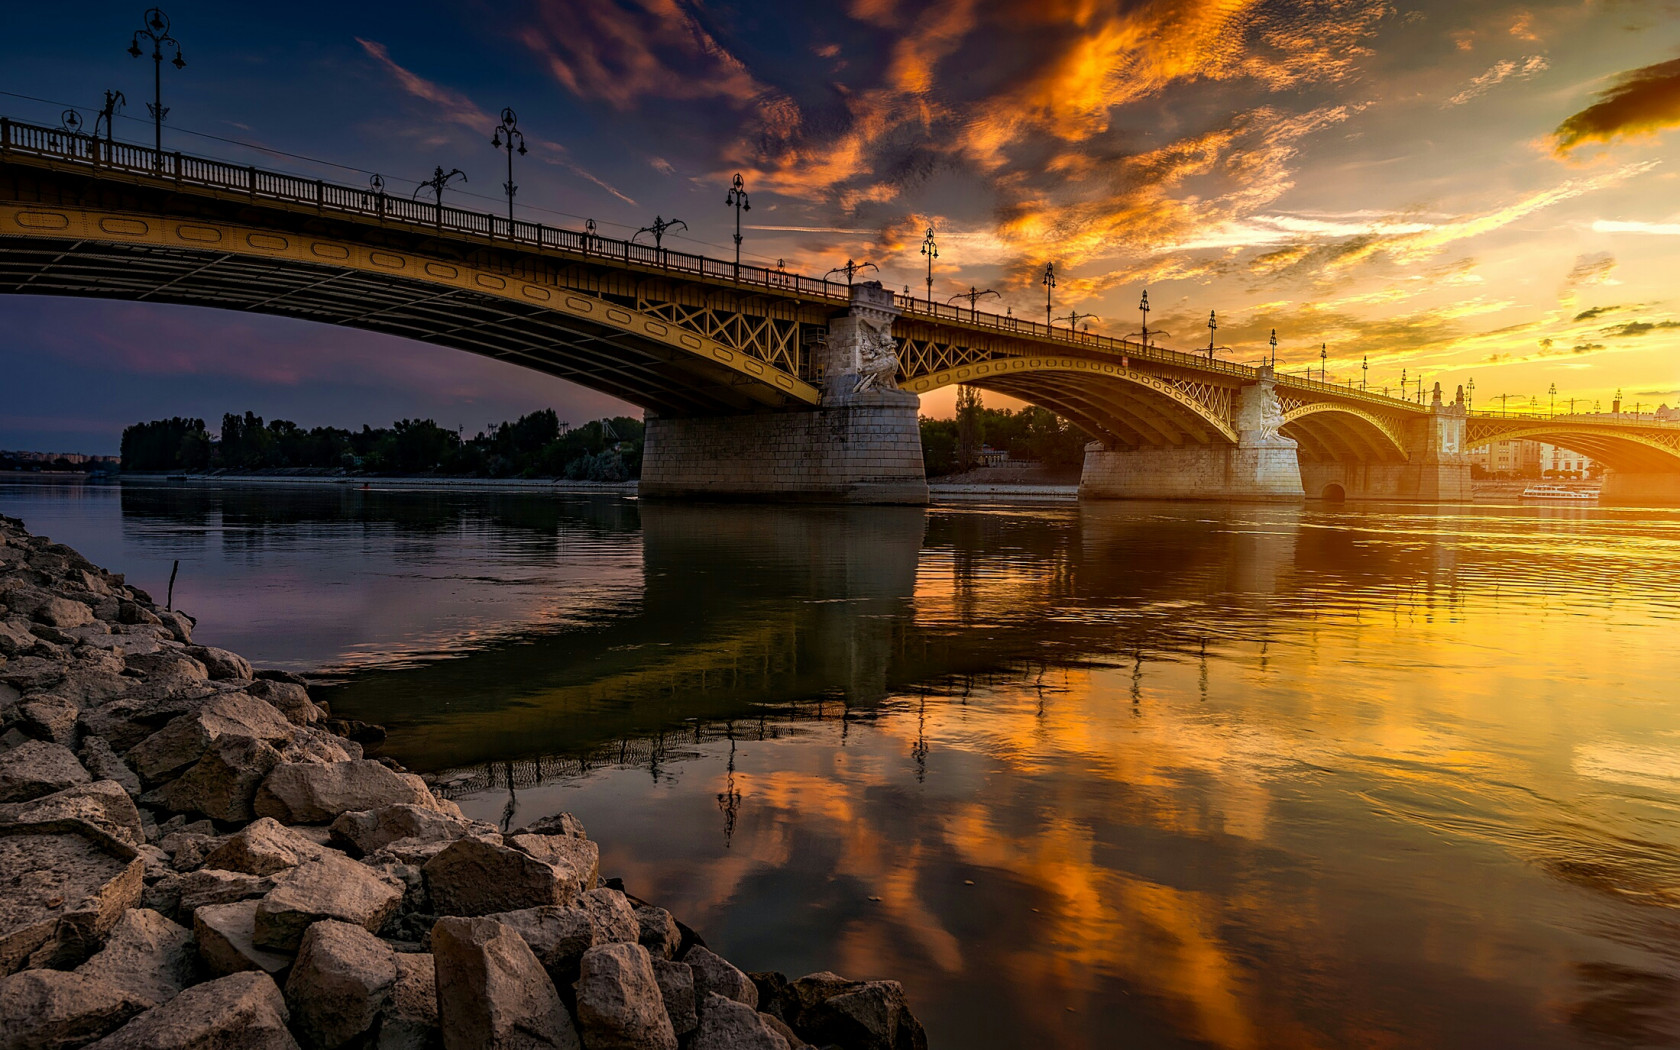 Węgry, Budapeszt, rzeka i most